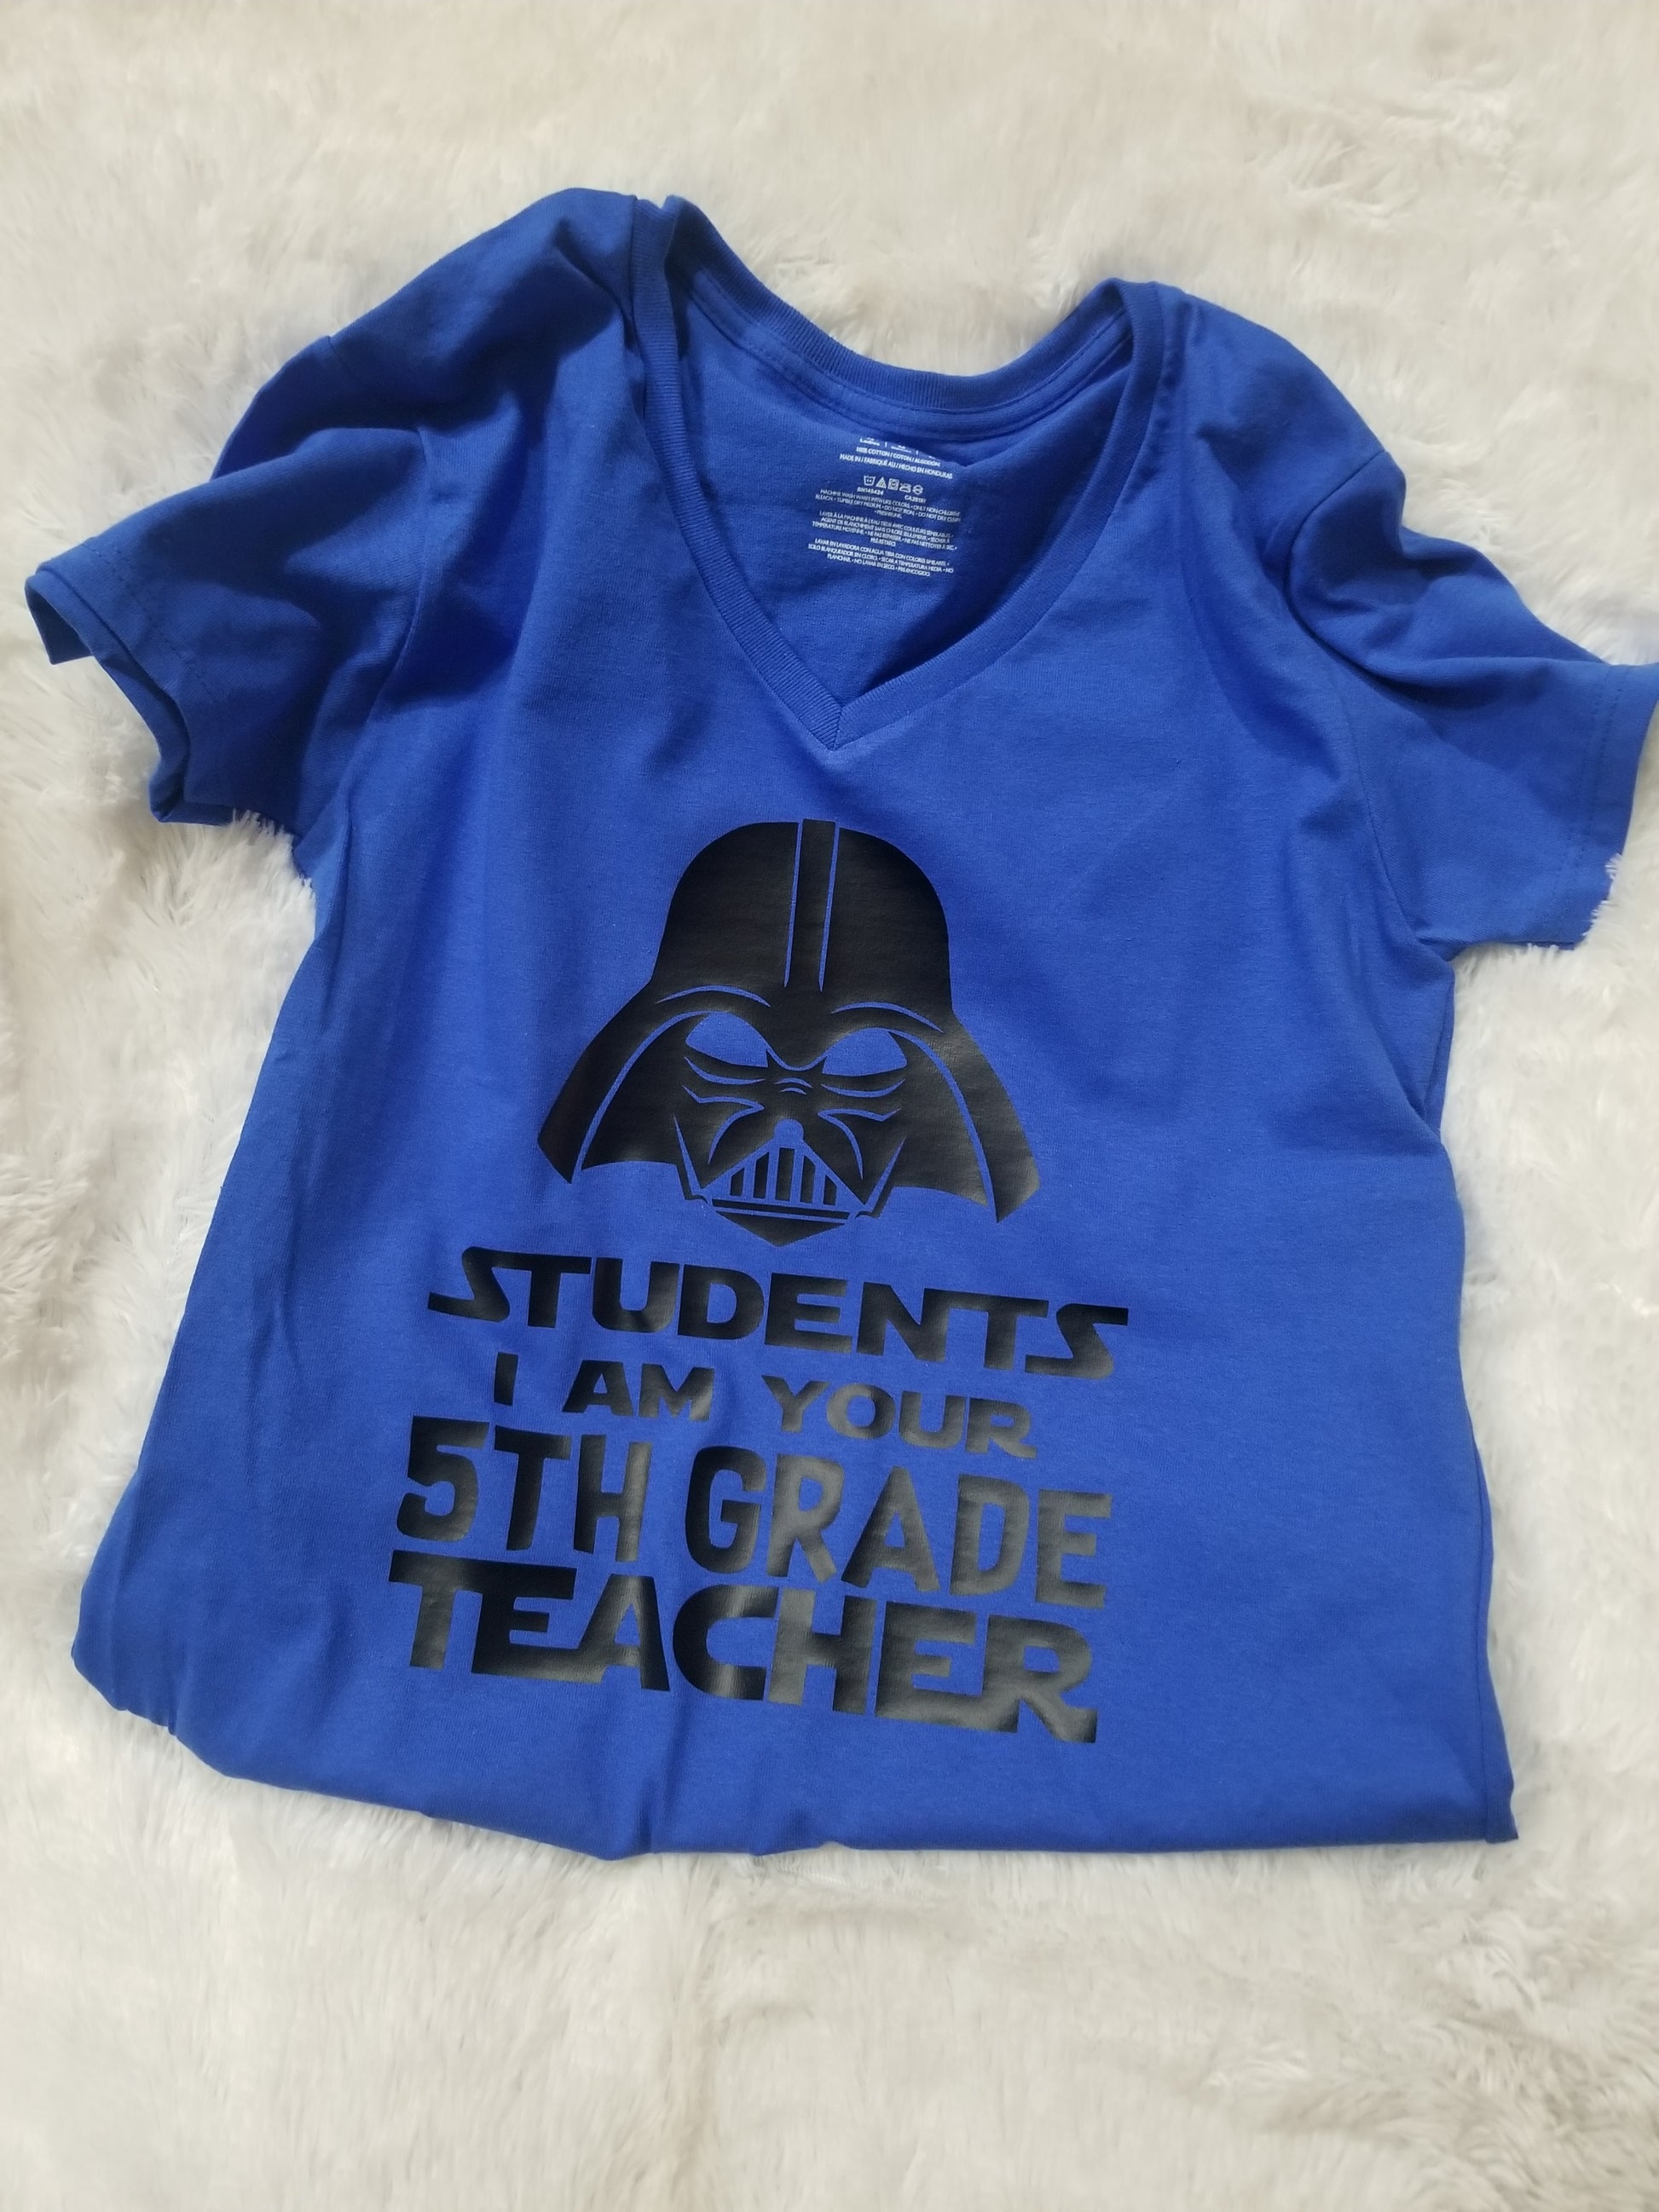 Starwars teacher shirt